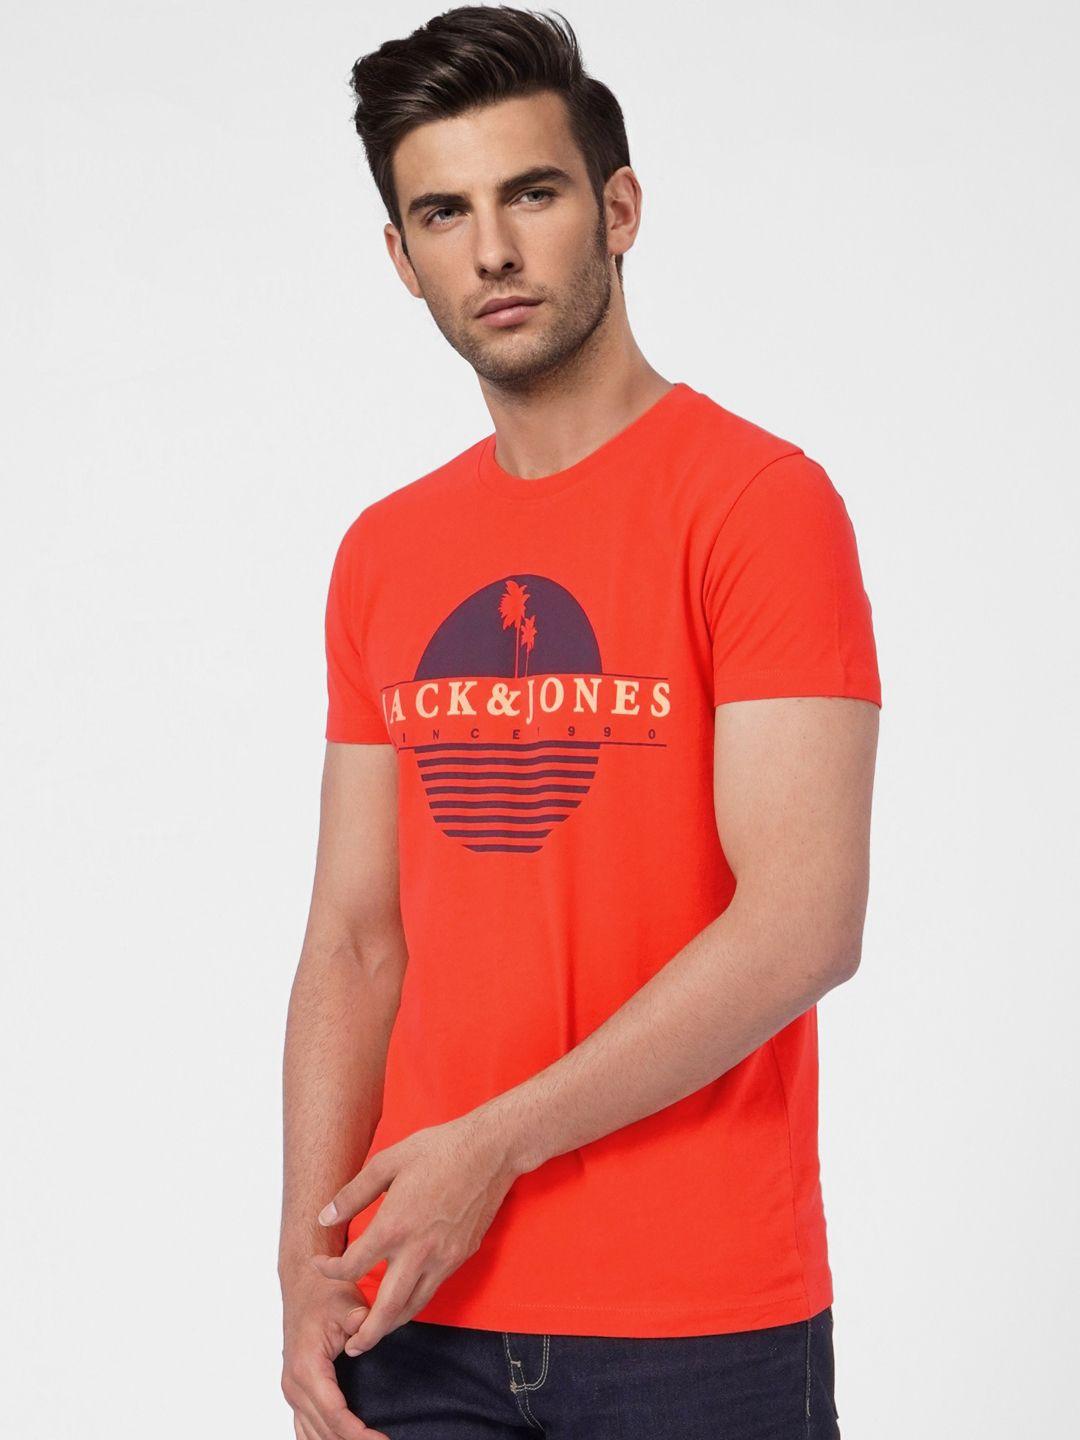 jack & jones men orange & white brand logo printed pure cotton slim fit t-shirt